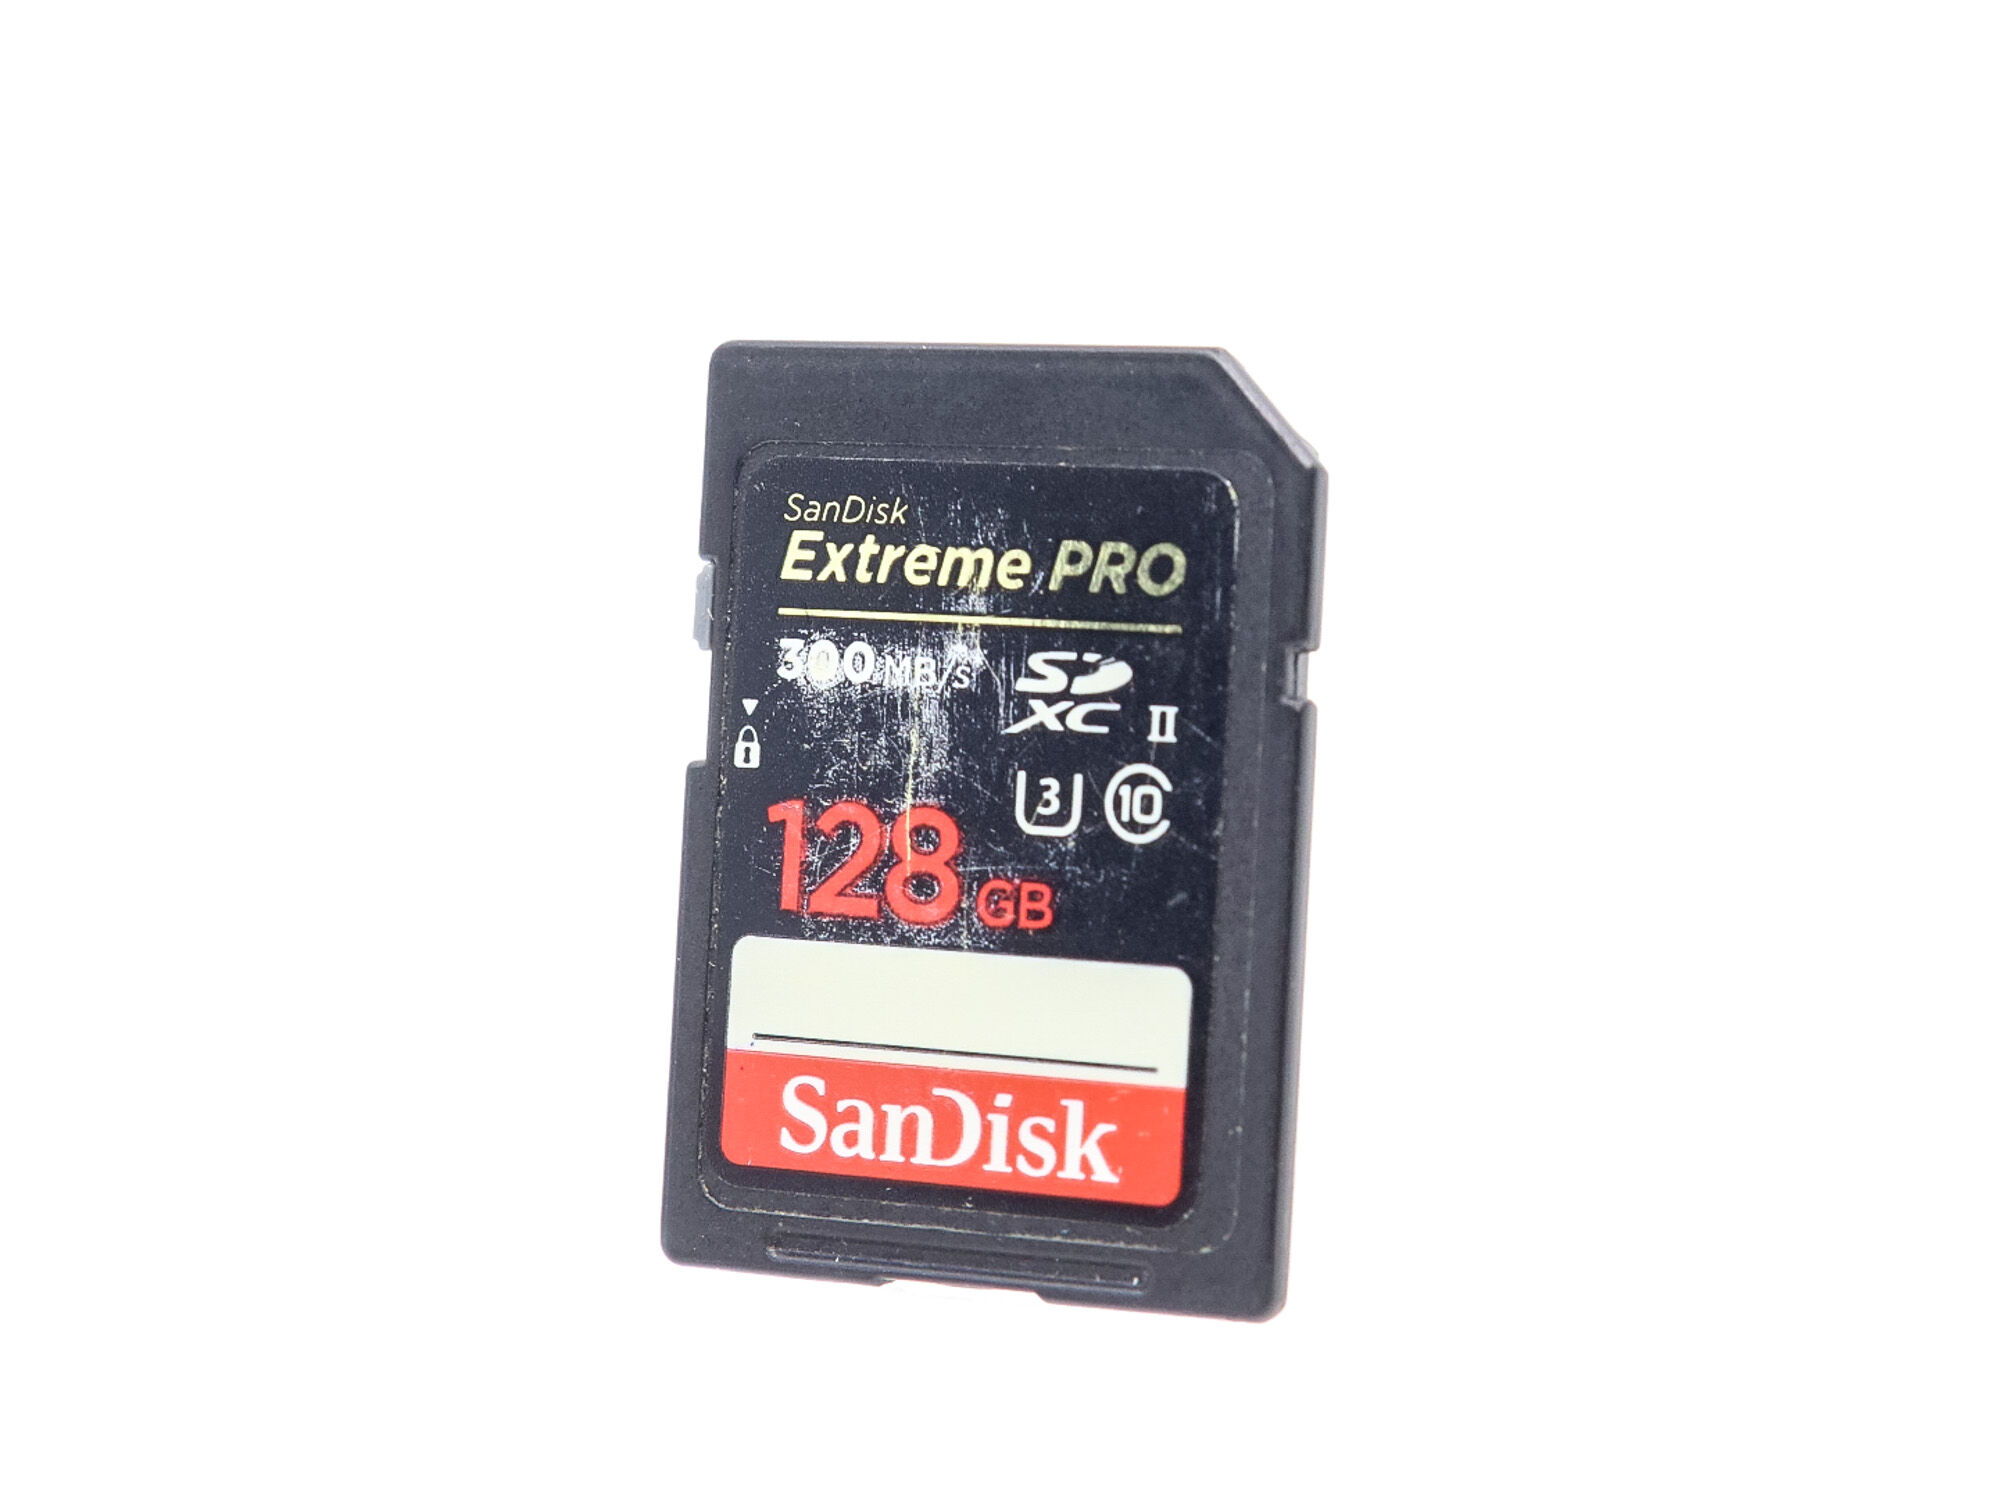 sandisk 128gb extreme pro 300 mb/s uhs-ii sdxc (condition: good)